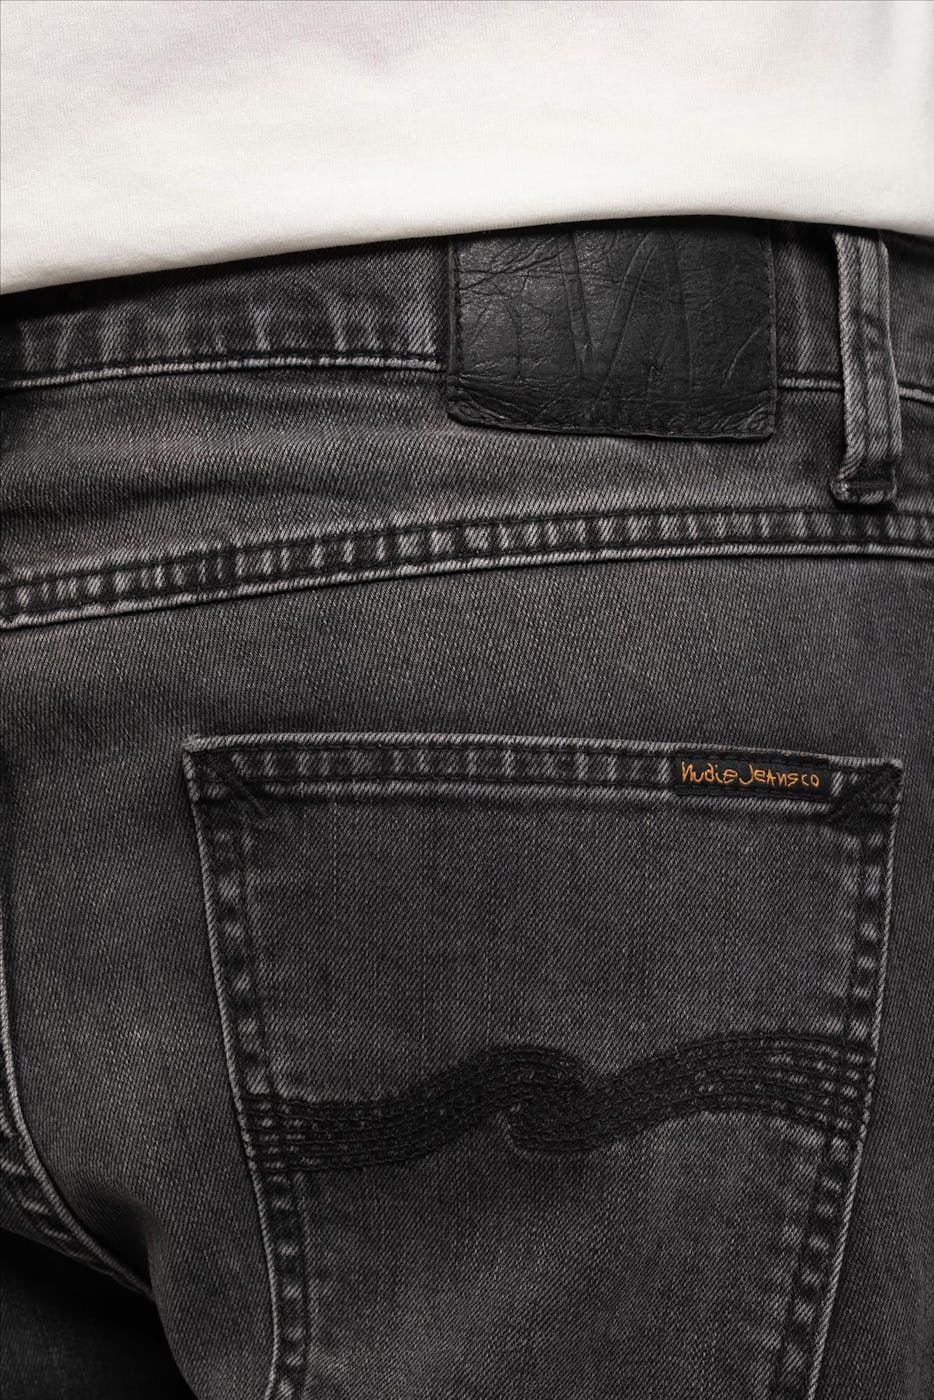 Nudie Jeans Co. - Donkergrijze Lean Dean slim tapered jeans